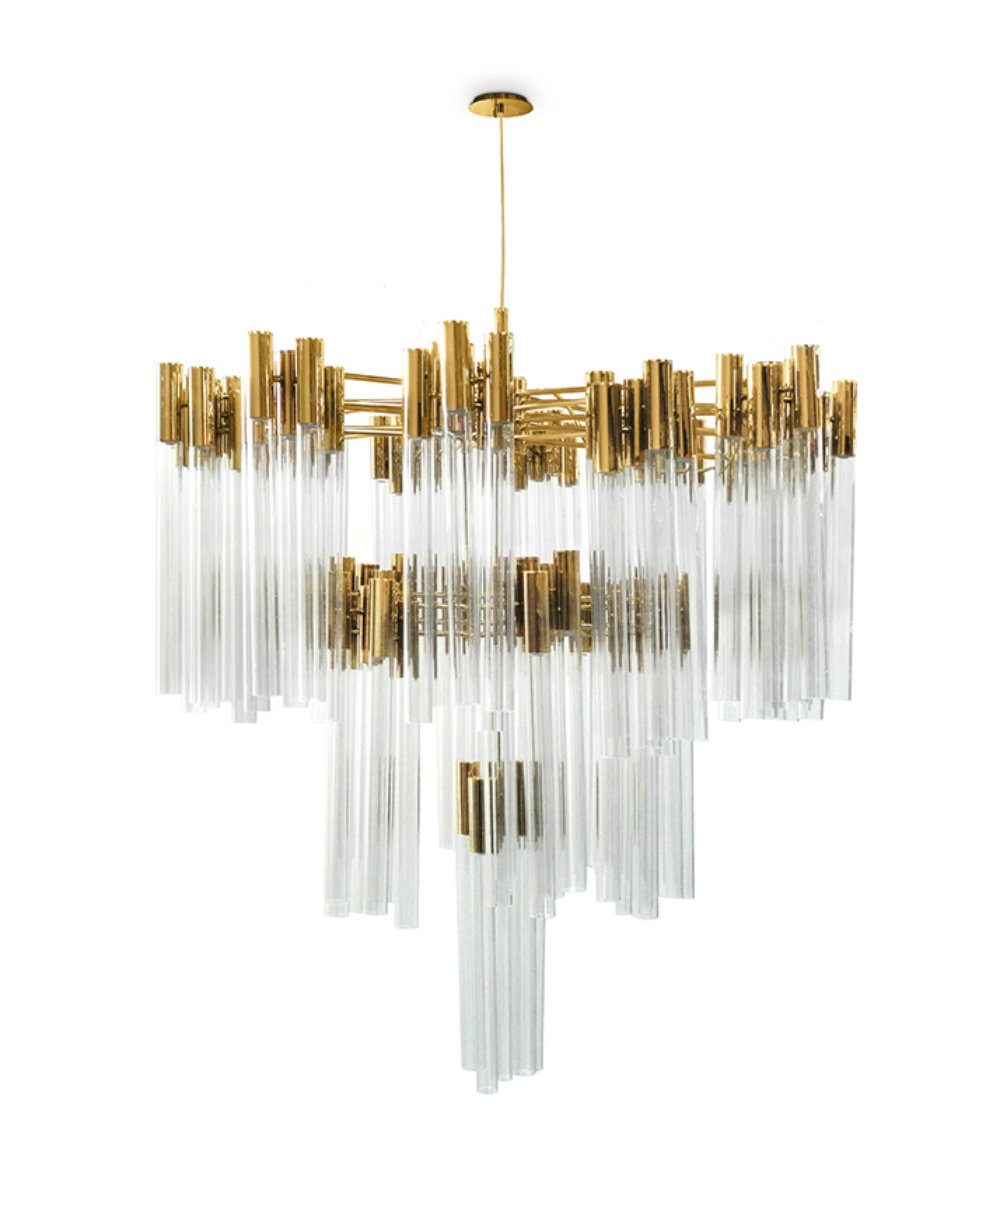 Lighting Inspiration: Meet The Burj Collection